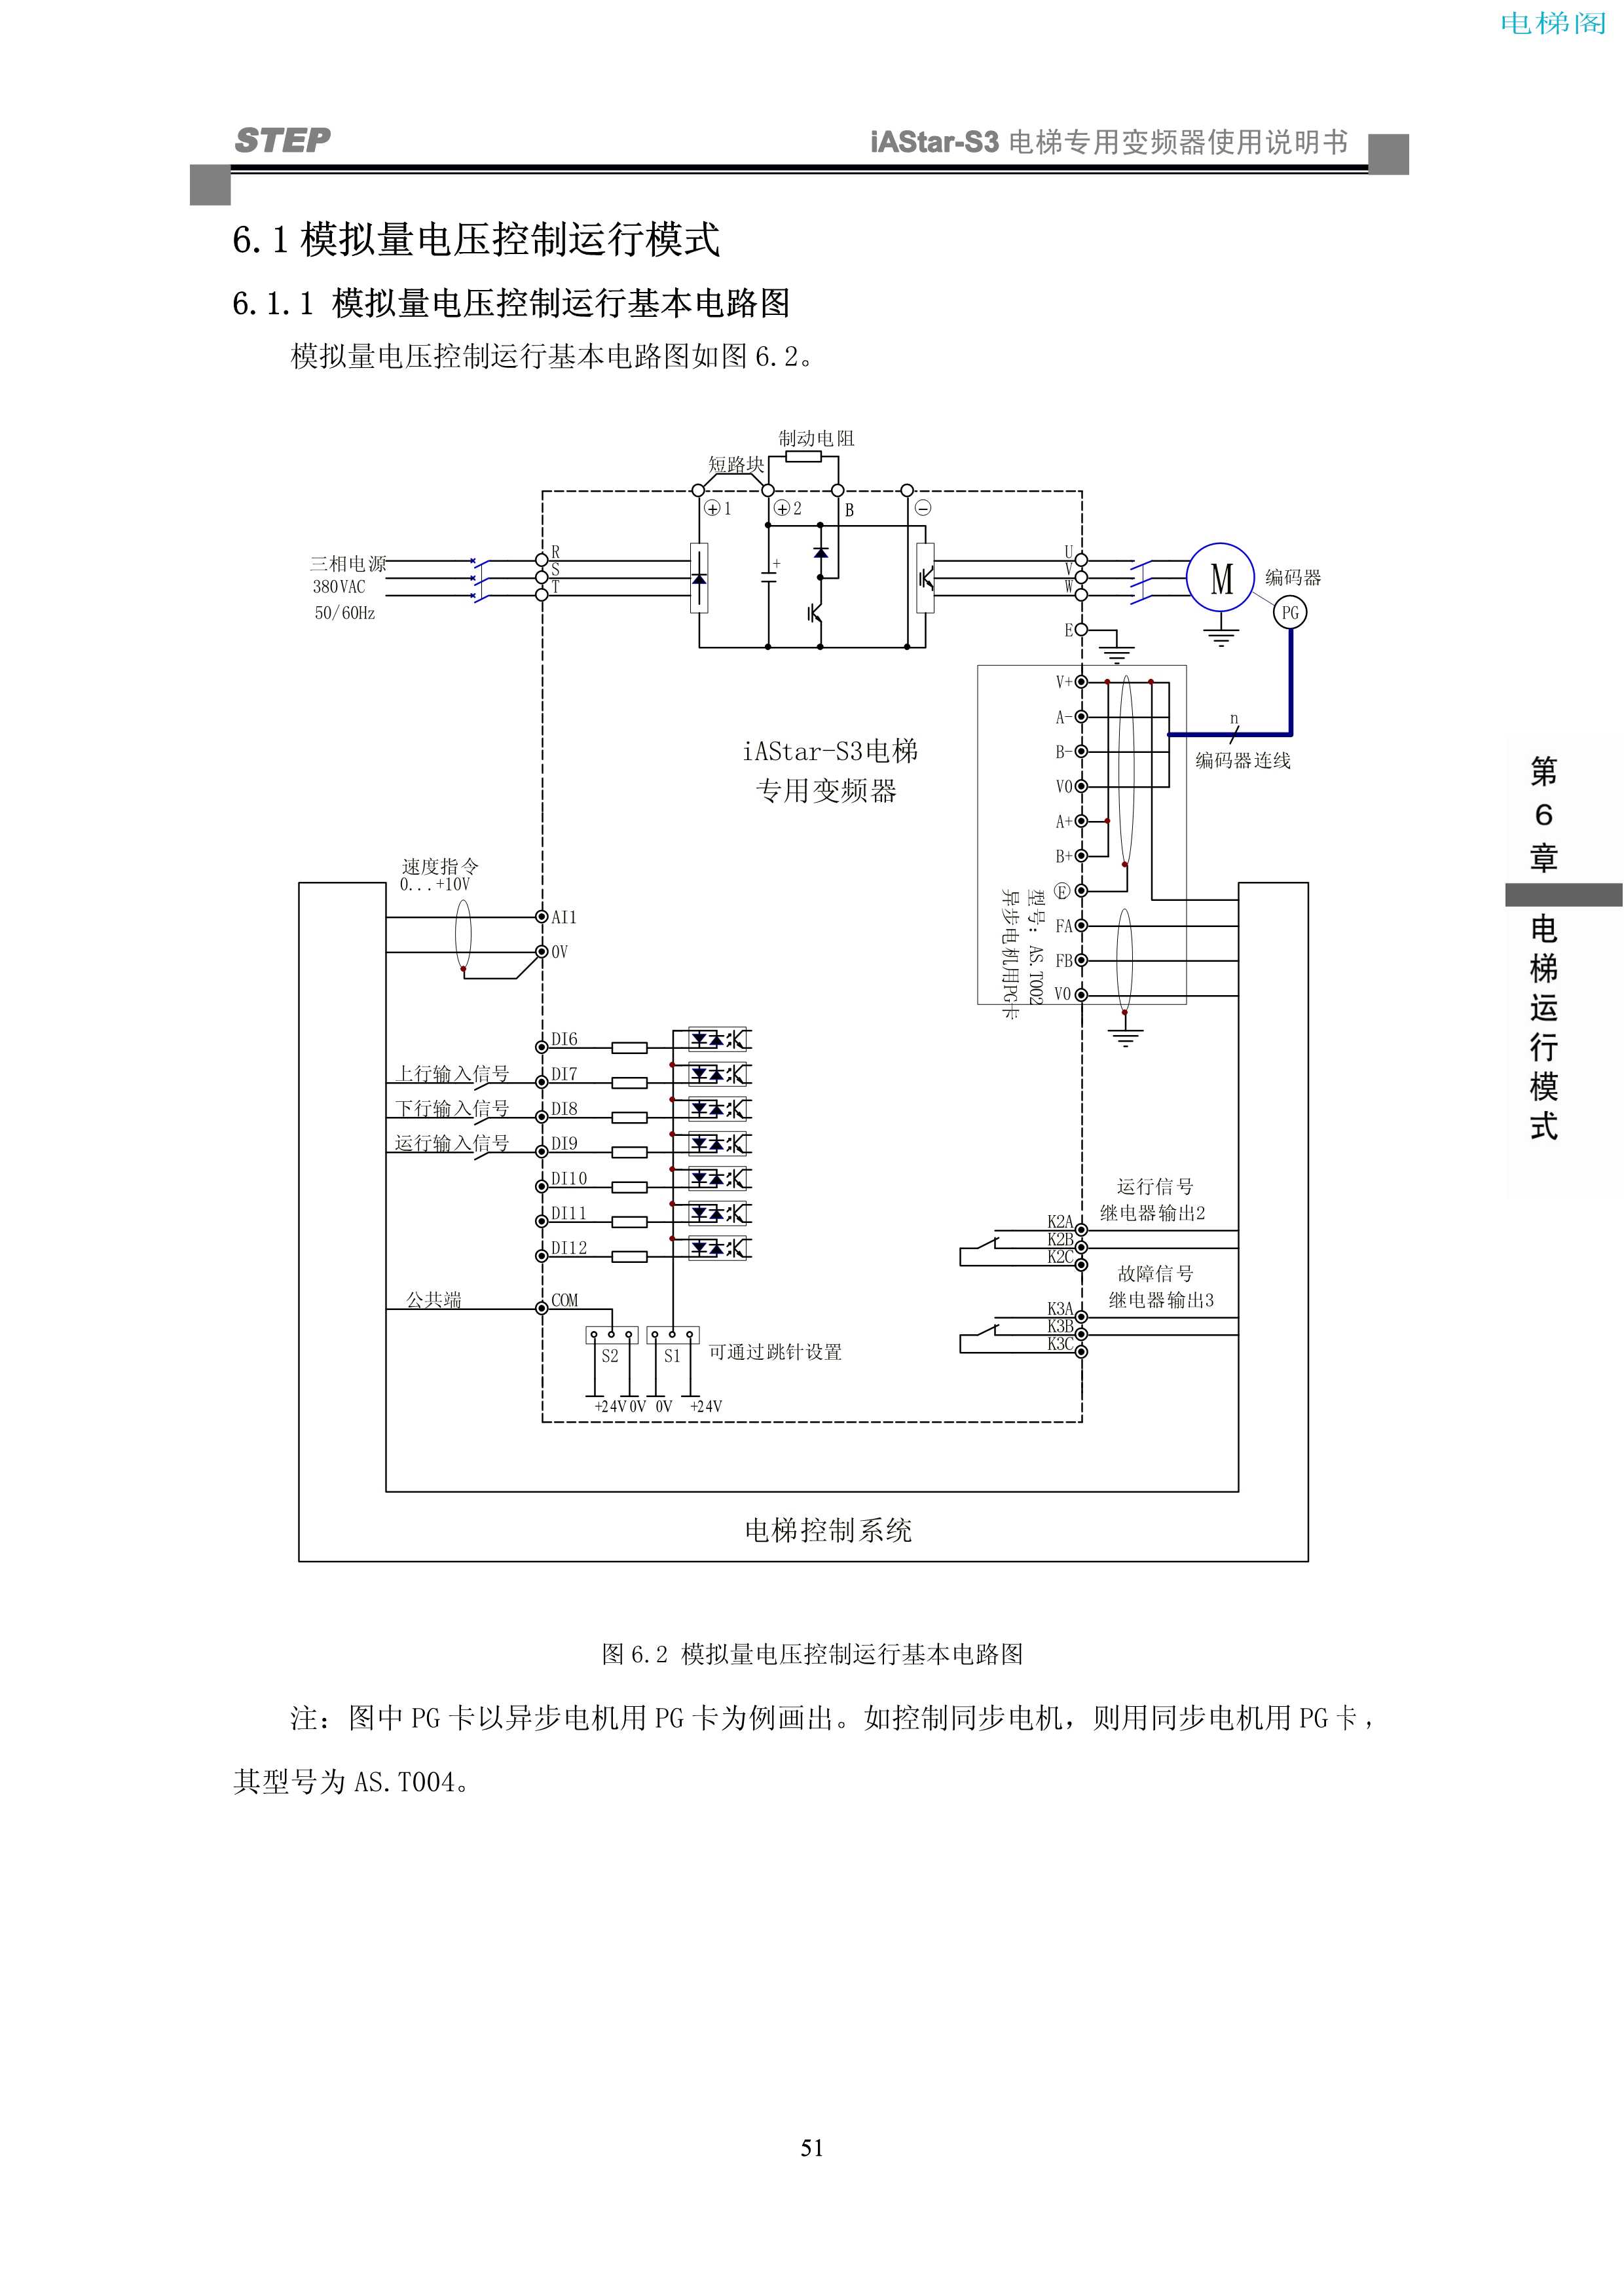 iAStar-S3系列电梯专用变频器使用说明书-9(V2[1].03)_59.jpg